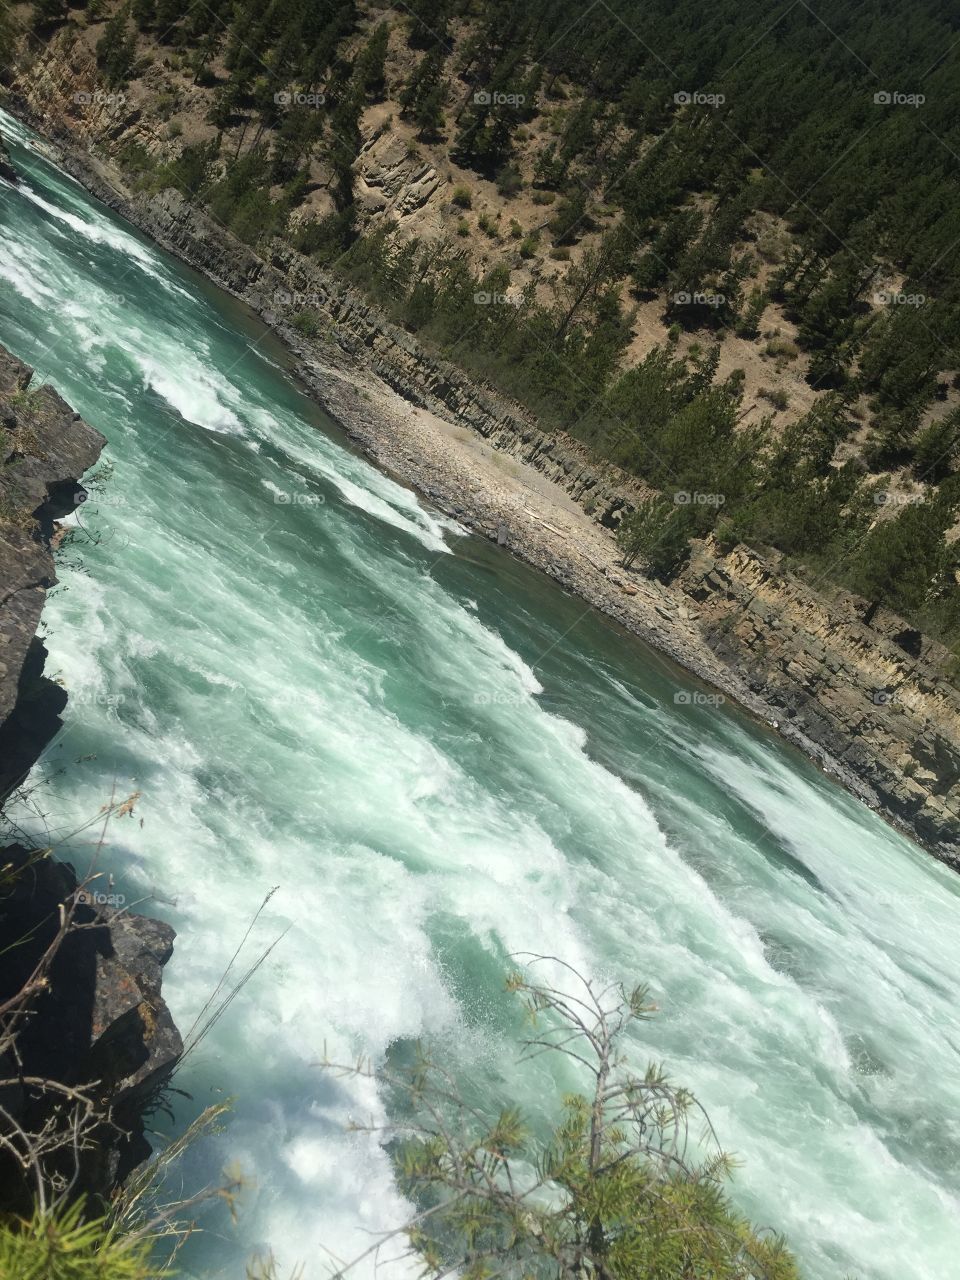 Kootenai Falls . Photo taken at Kootenai Falls, Montana 